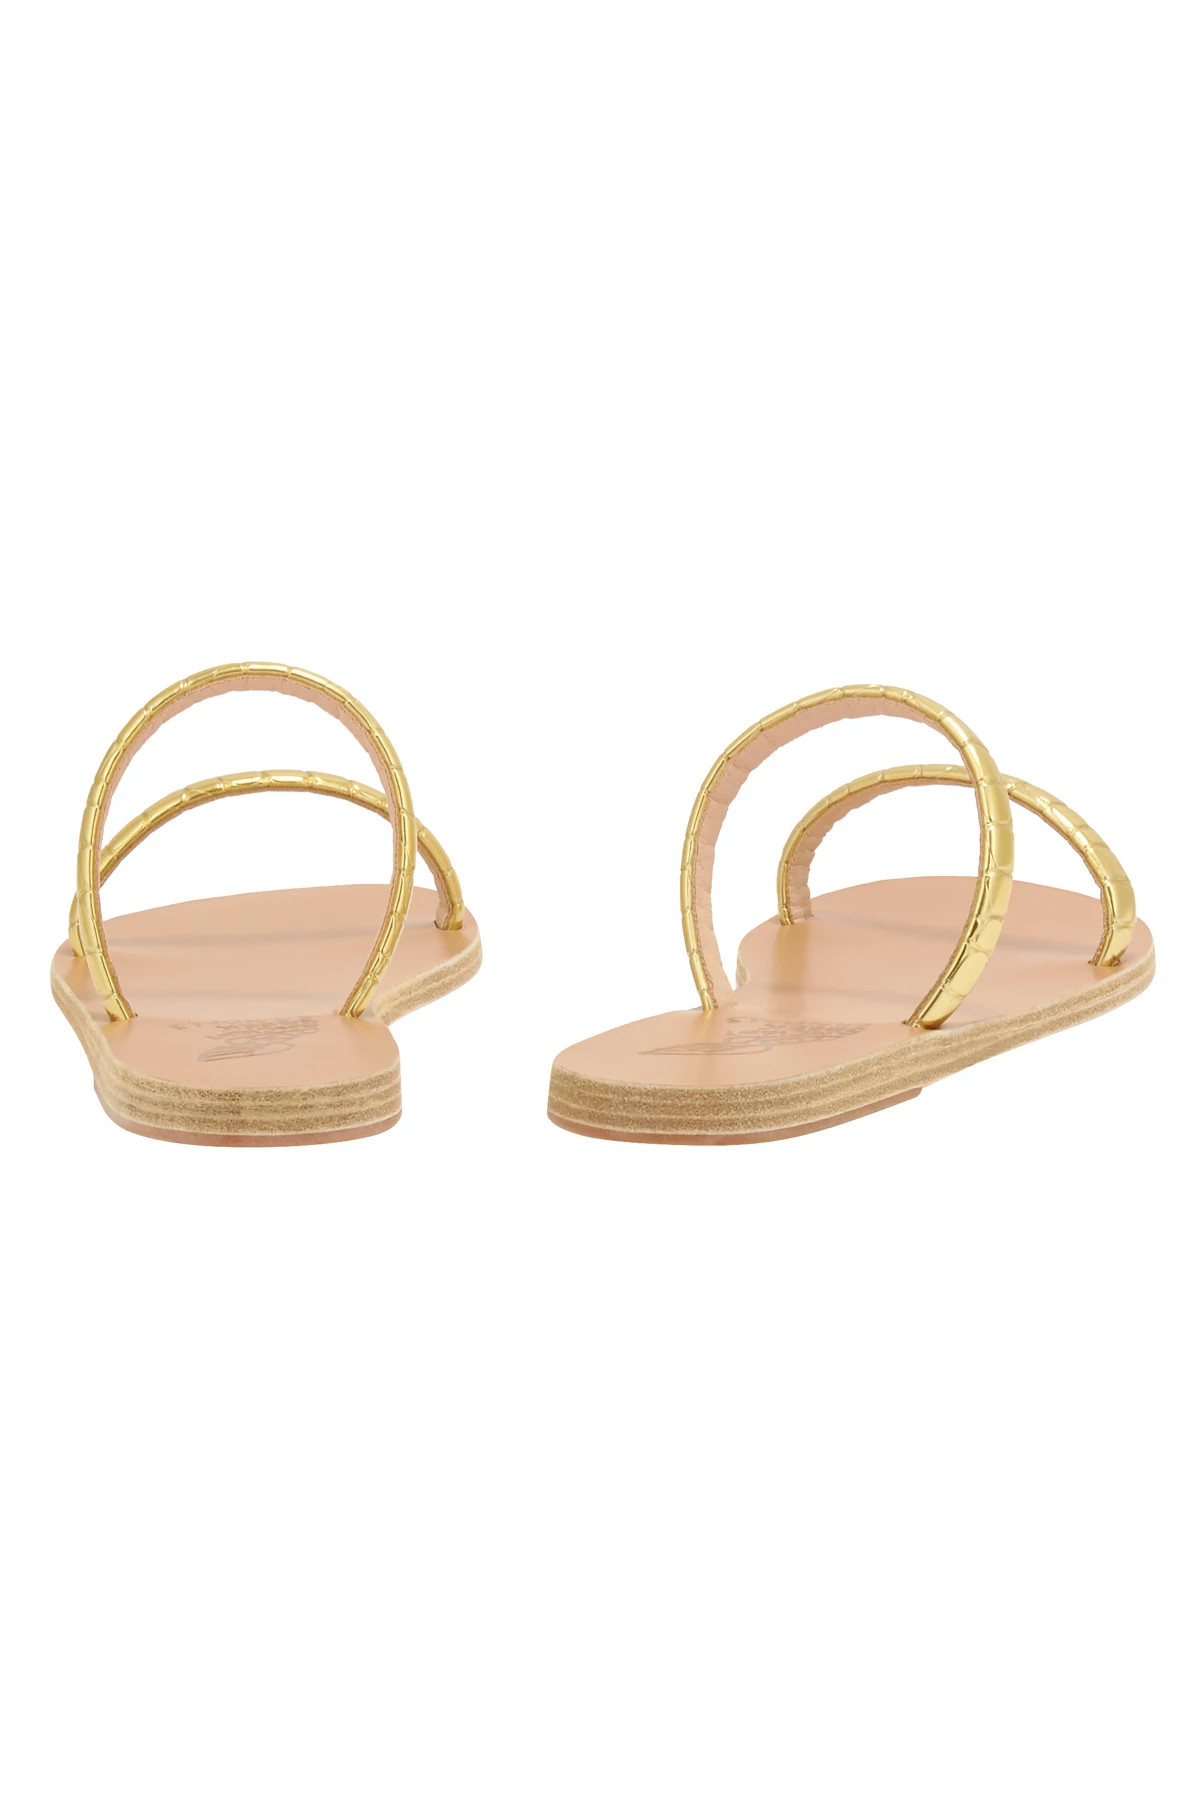 GOLD Echinda Sandals image number 4